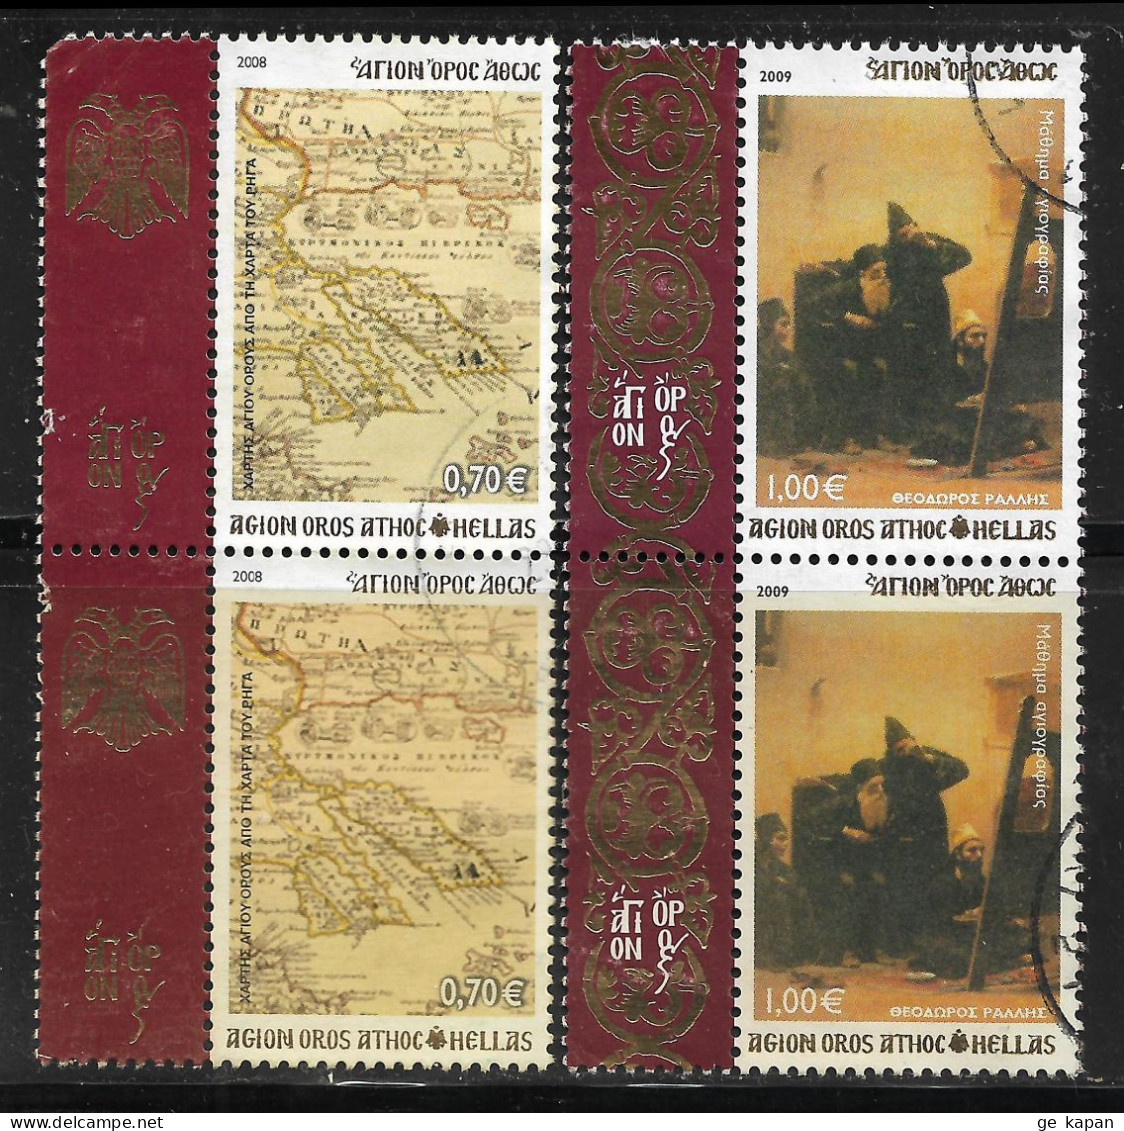 2008,2009 GREECE Mount Athos Set Of 2 Used Pair Stamps (Scott # 3,39) CV $10.50 - Gebraucht